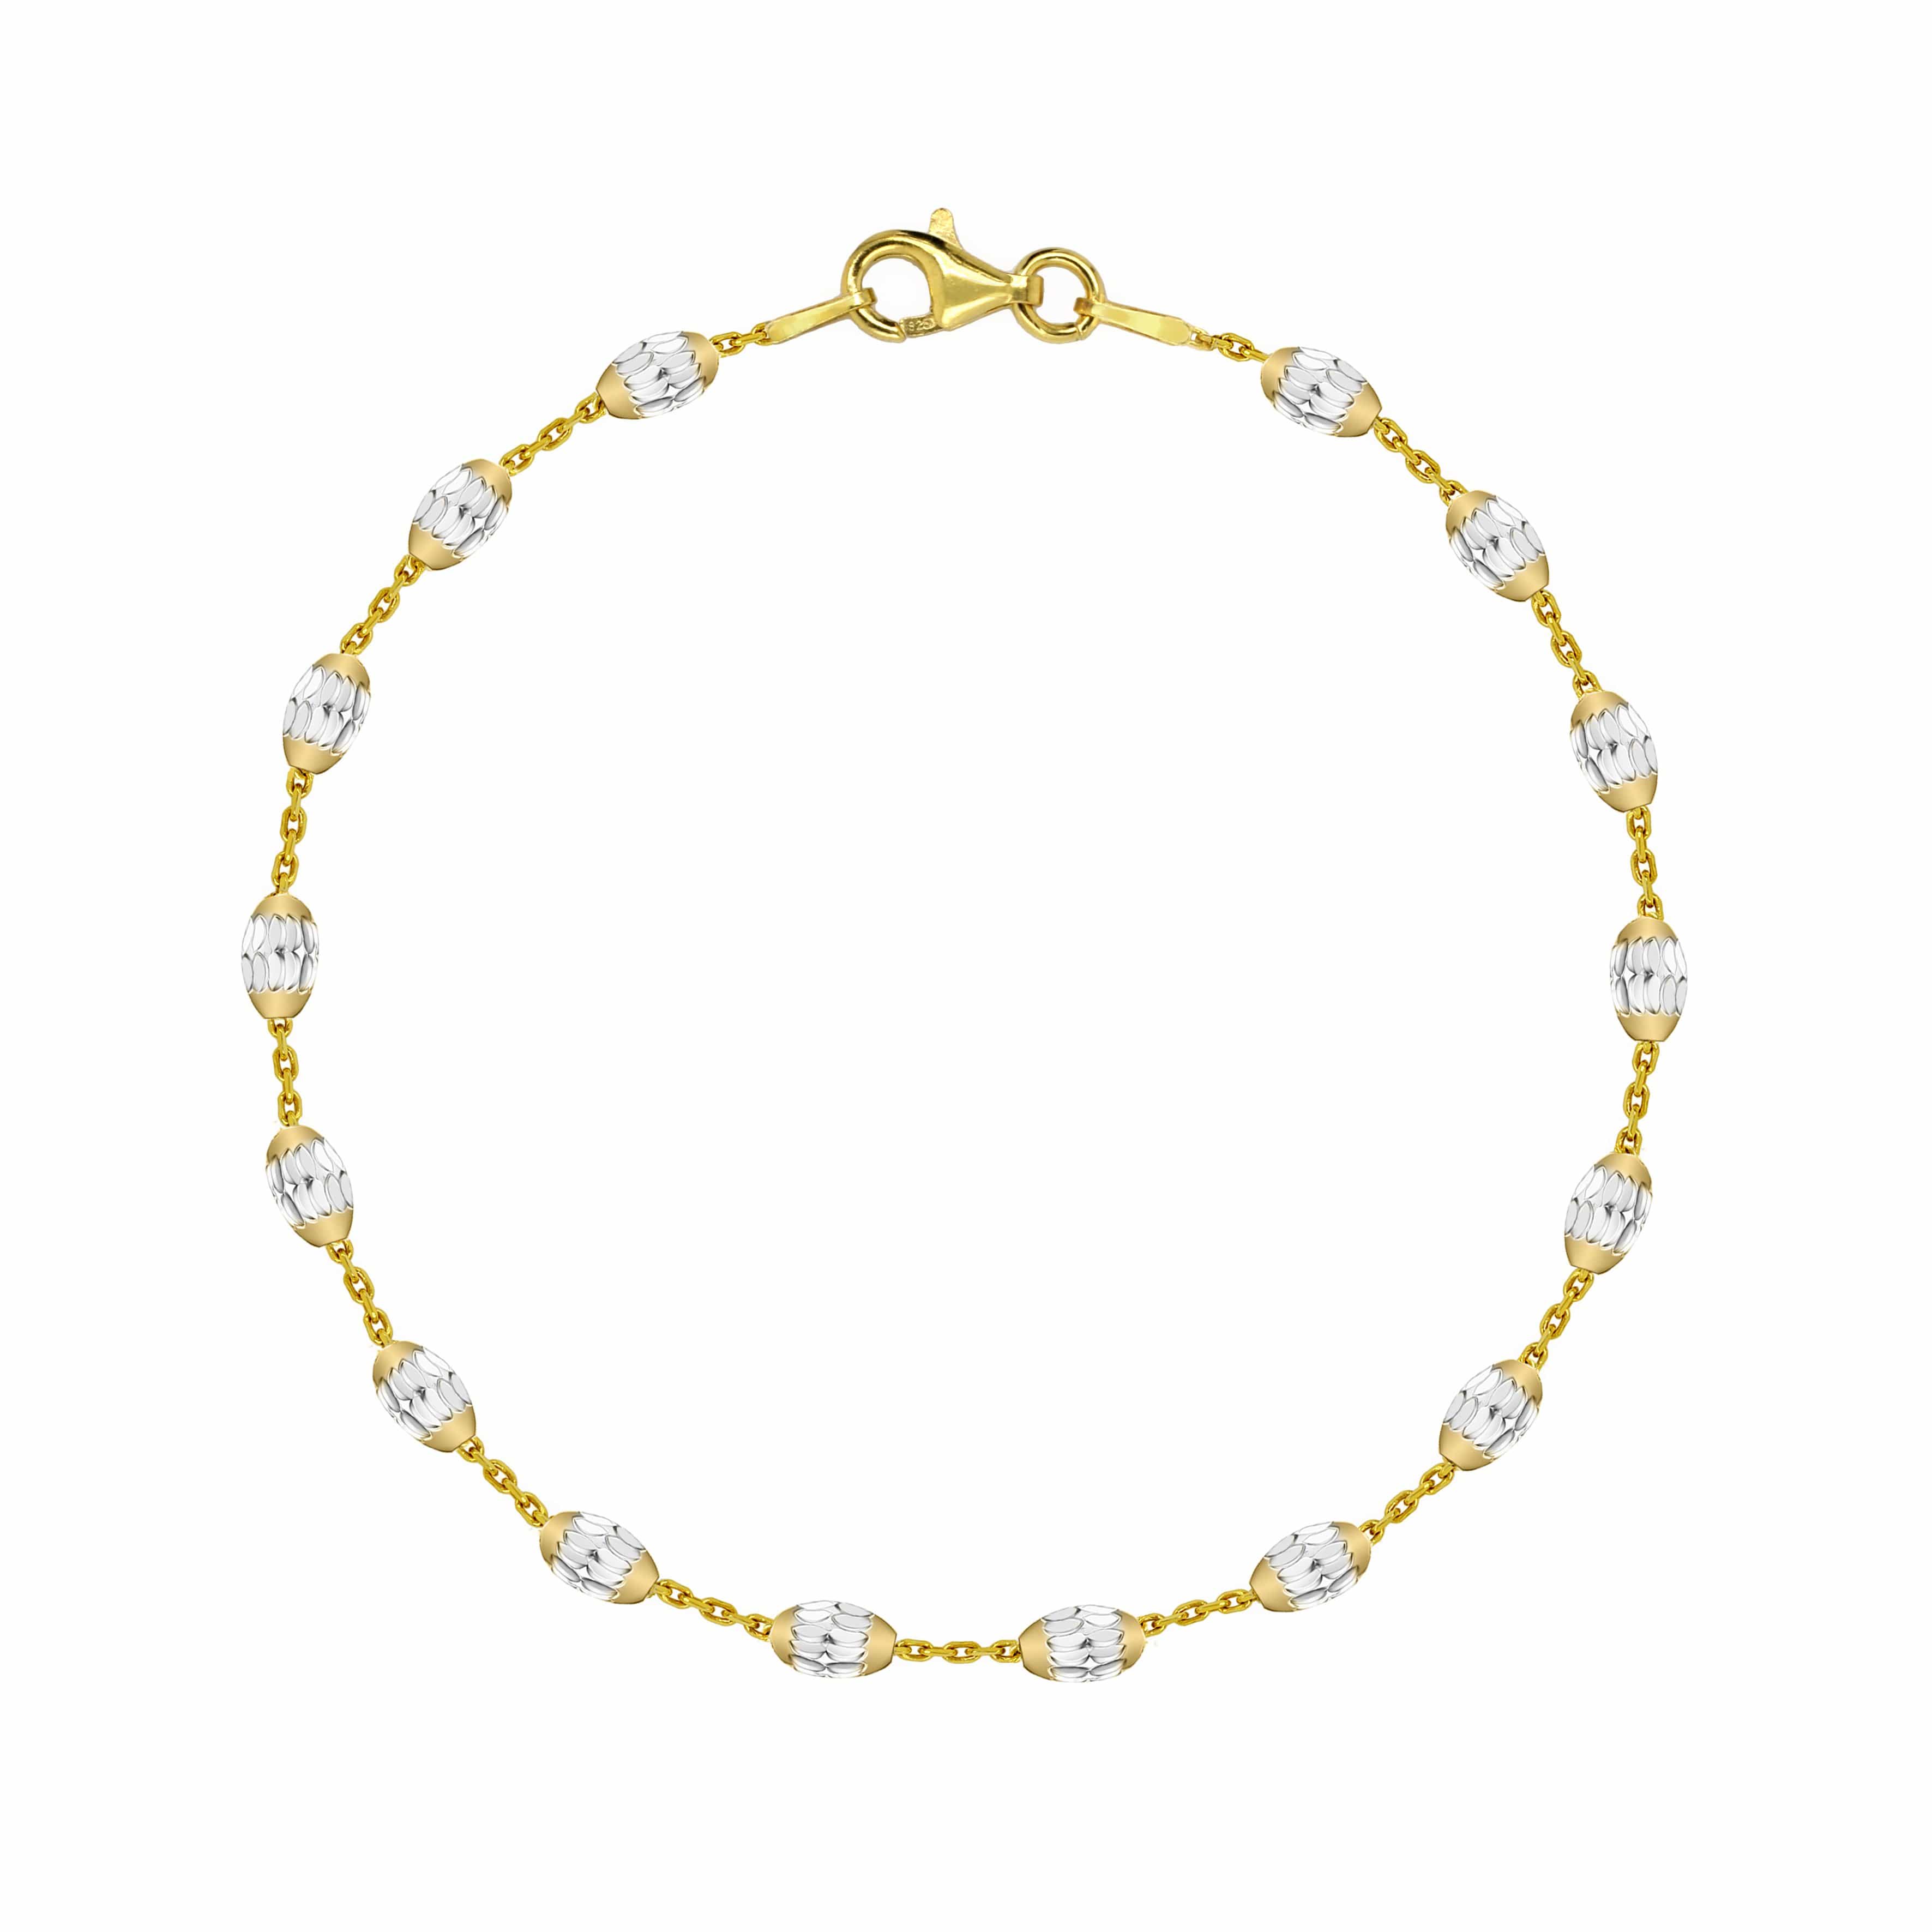 Lynora Jewellery Bracelet 7.5" / Yellow Gold Plate Geobeads Bracelet Yellow Gold Plate